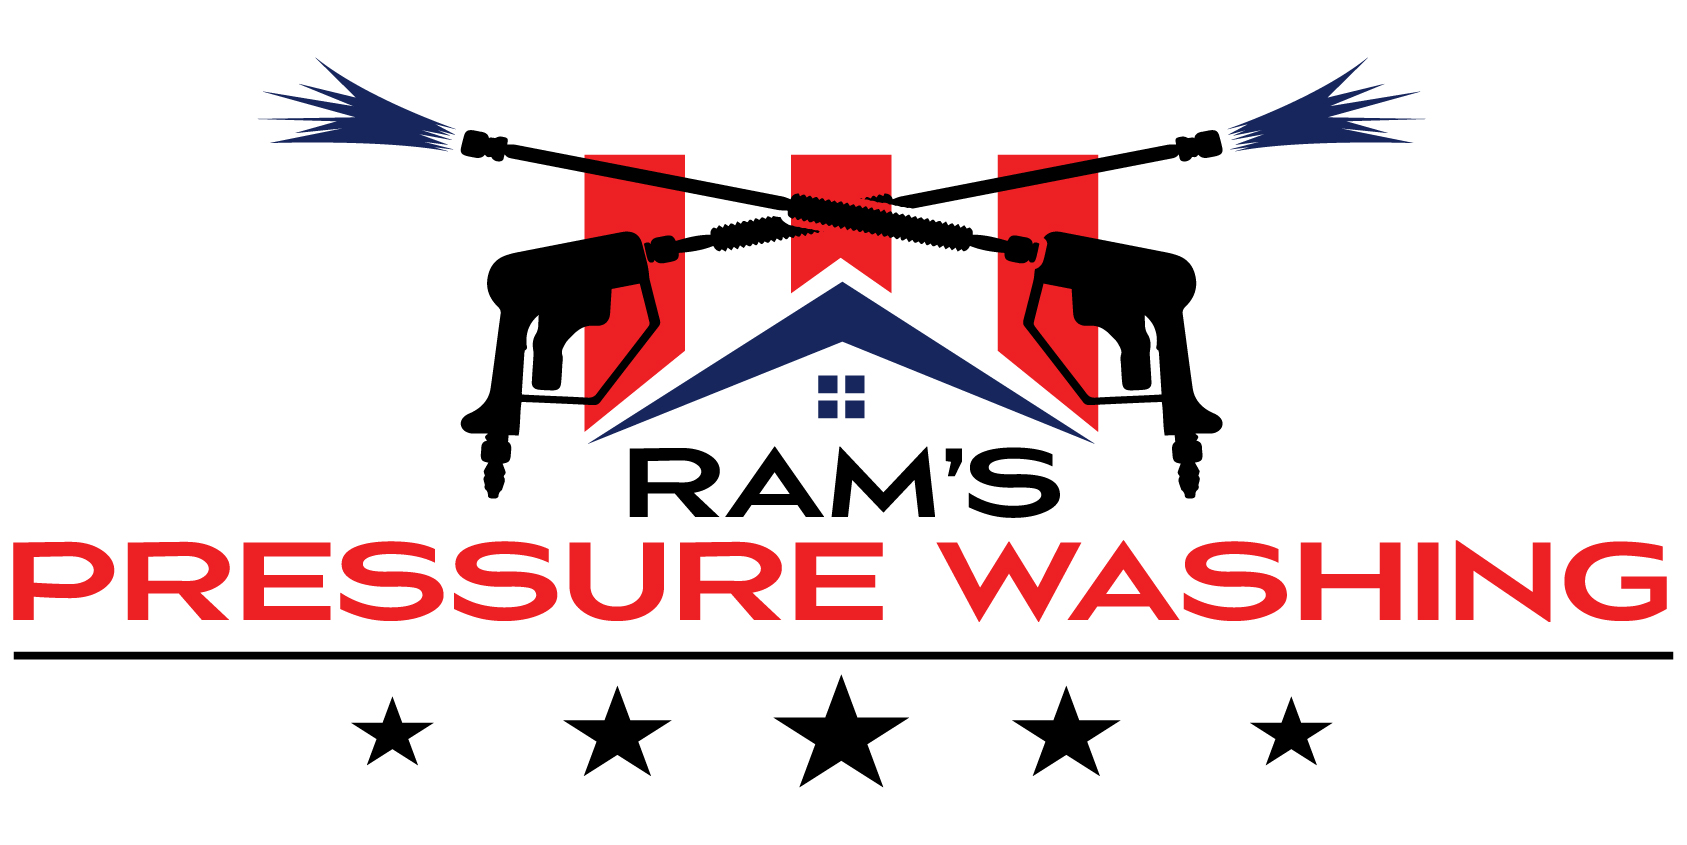 Ram's Pressure Washing-Unlicensed Contractor Logo